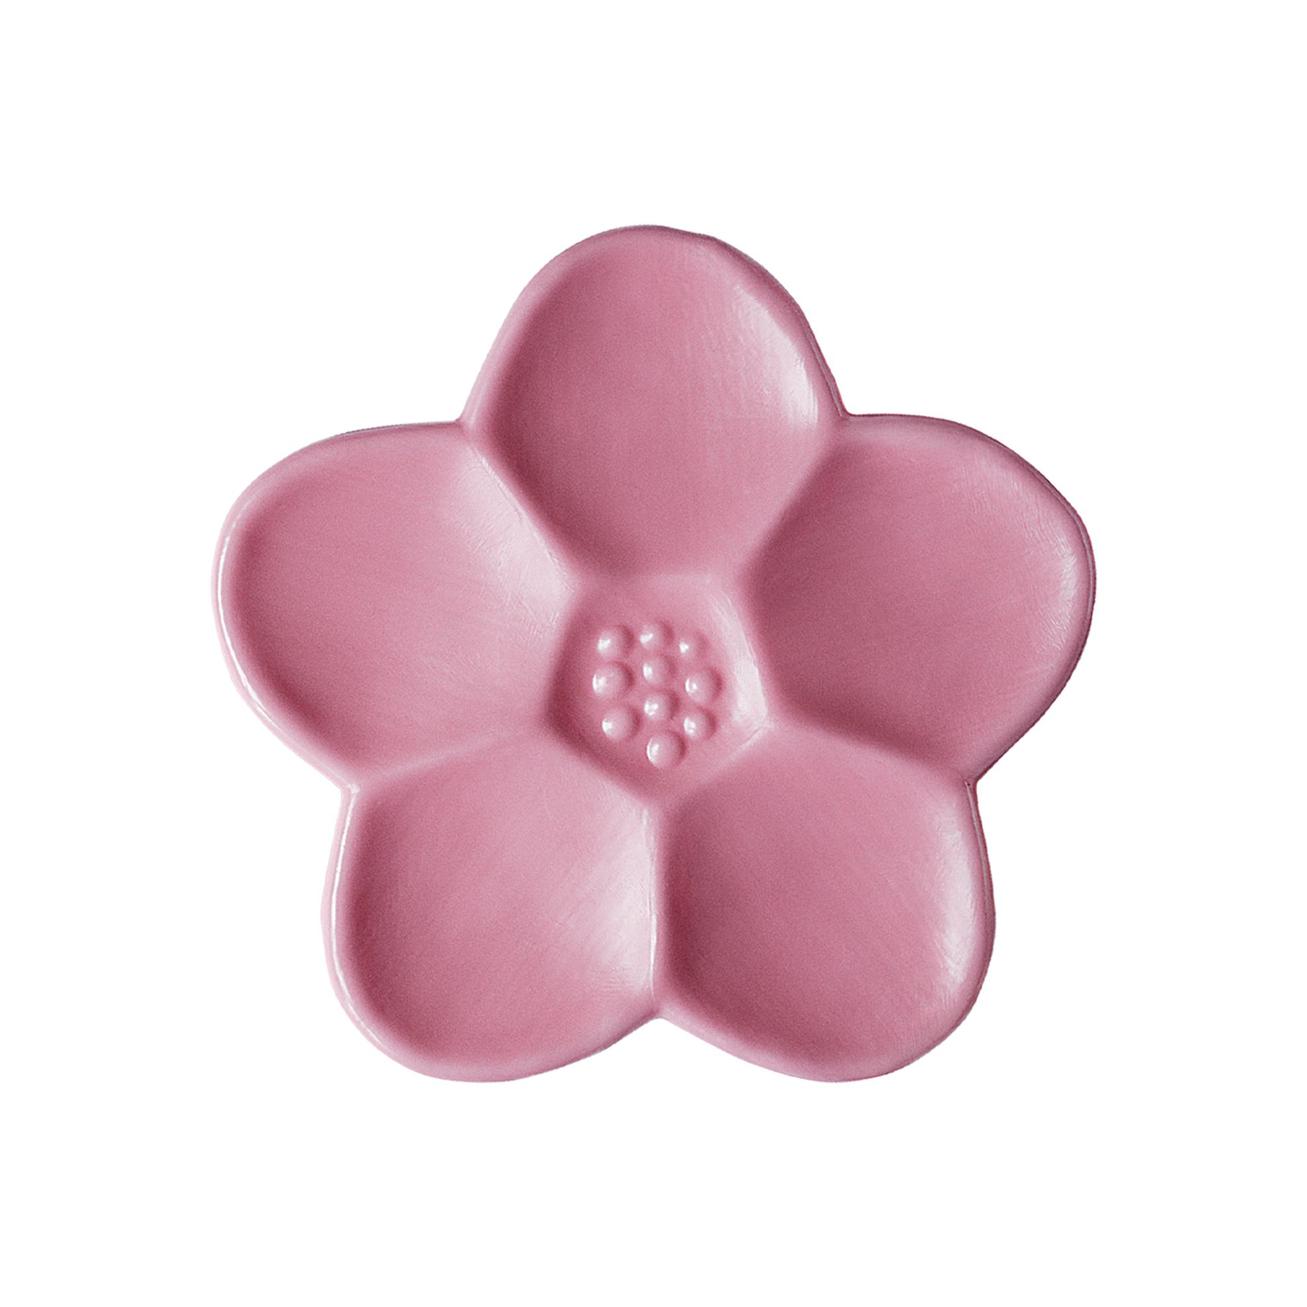 Blooming Blossom Soap Bar på tilbud til 39 kr. hos Oriflame